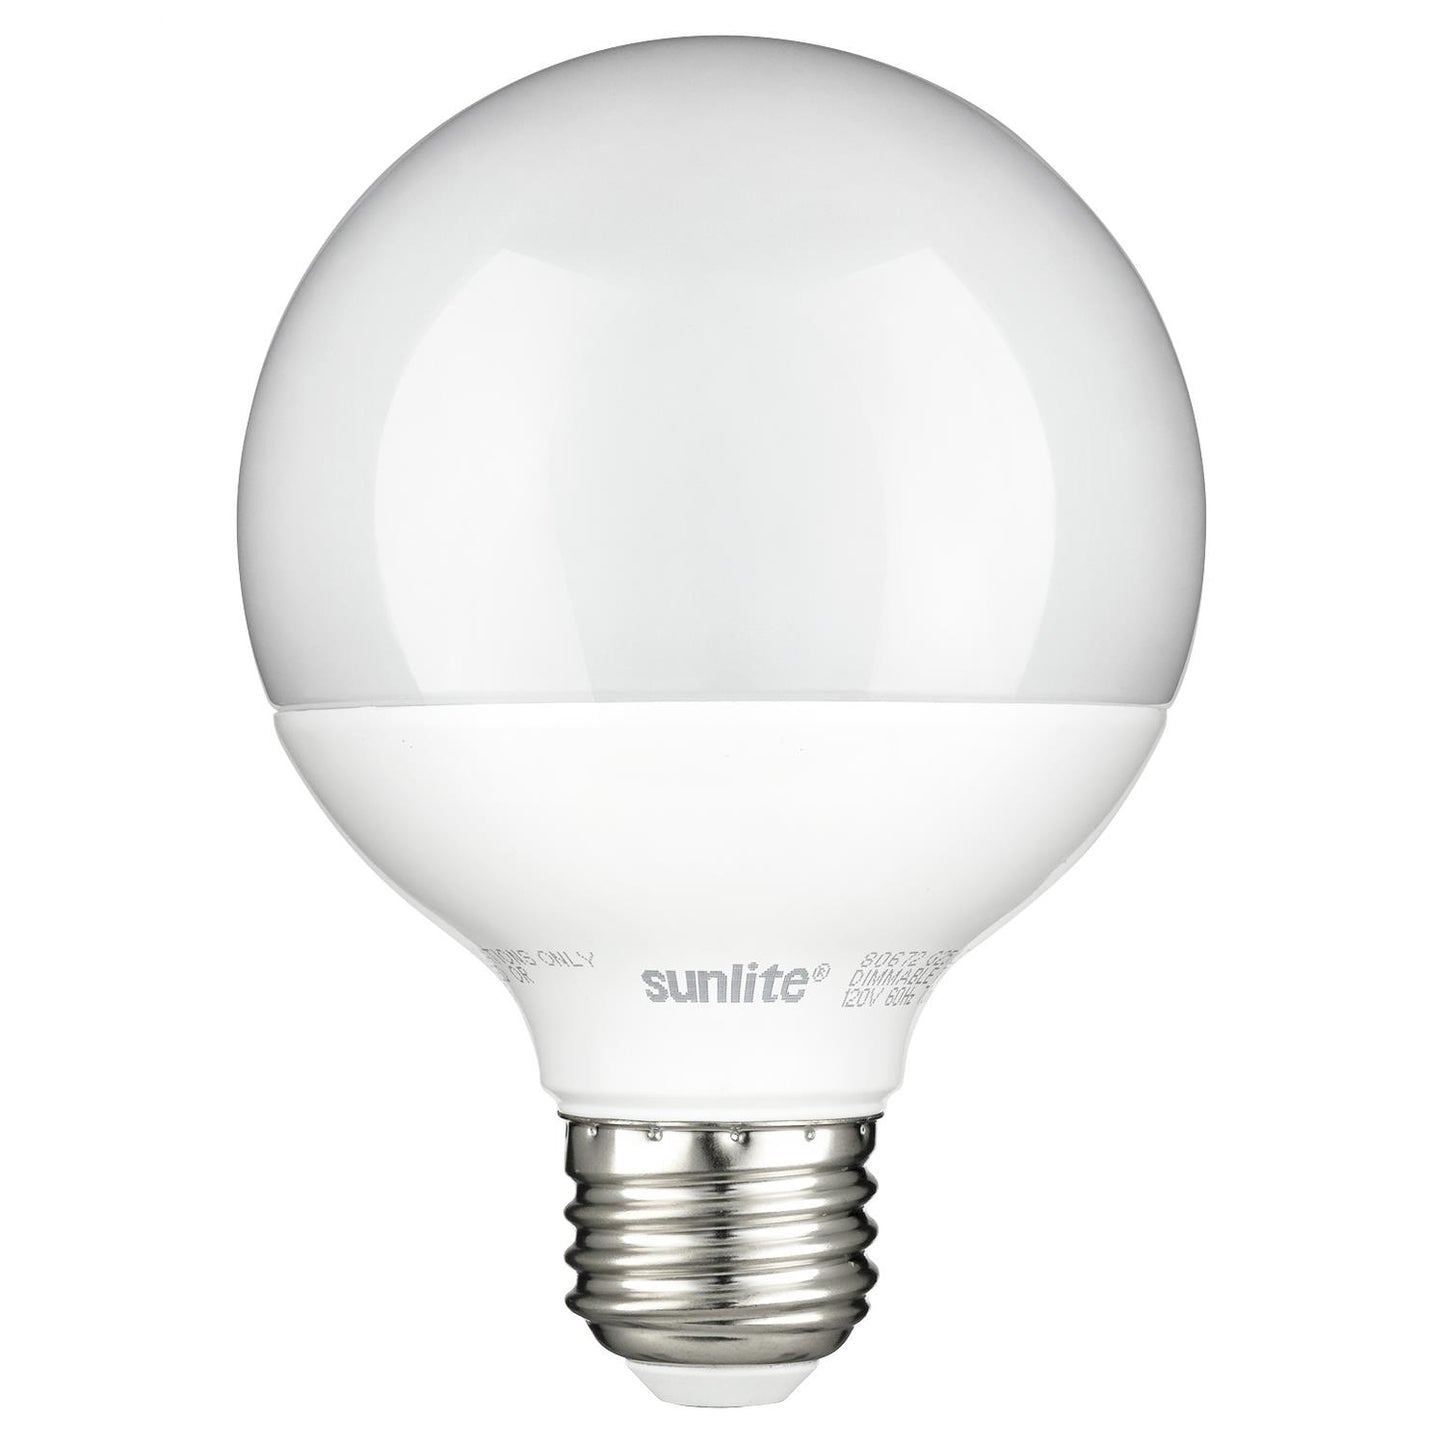 Sunlite 80675-SU High Voltage LED G25 Bulb, 7 Watts (40 Watt Equivalent), Medium Base, 220-240 Volts, Dimmable, 27K - Warm White 1 Pack